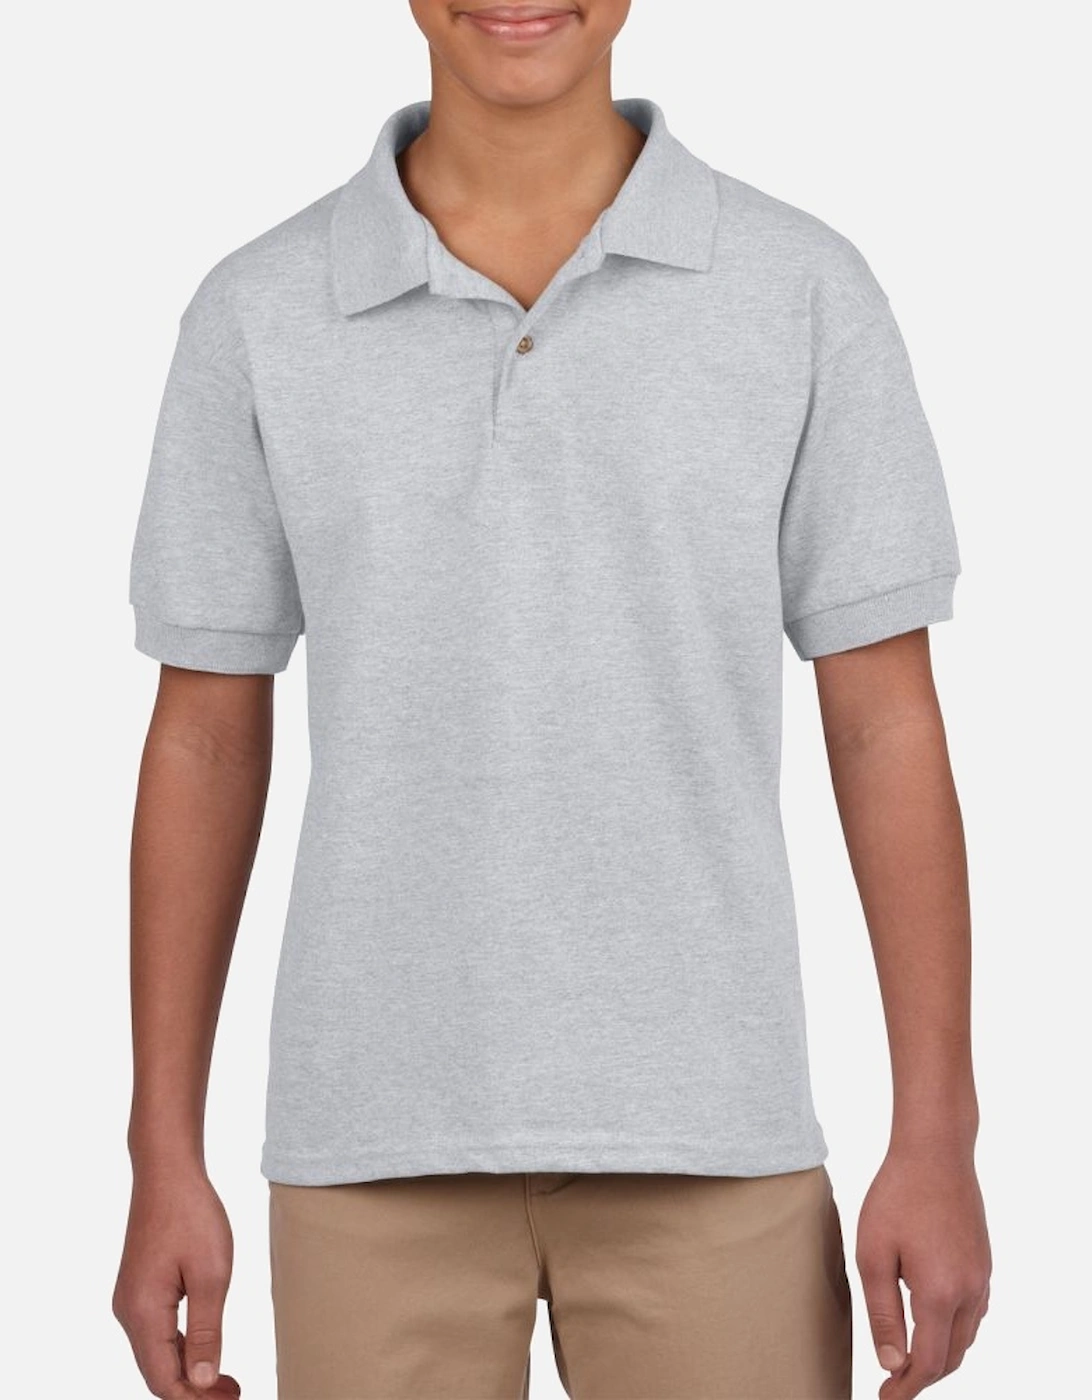 Childrens/Kids Plain Jersey Polo Shirt